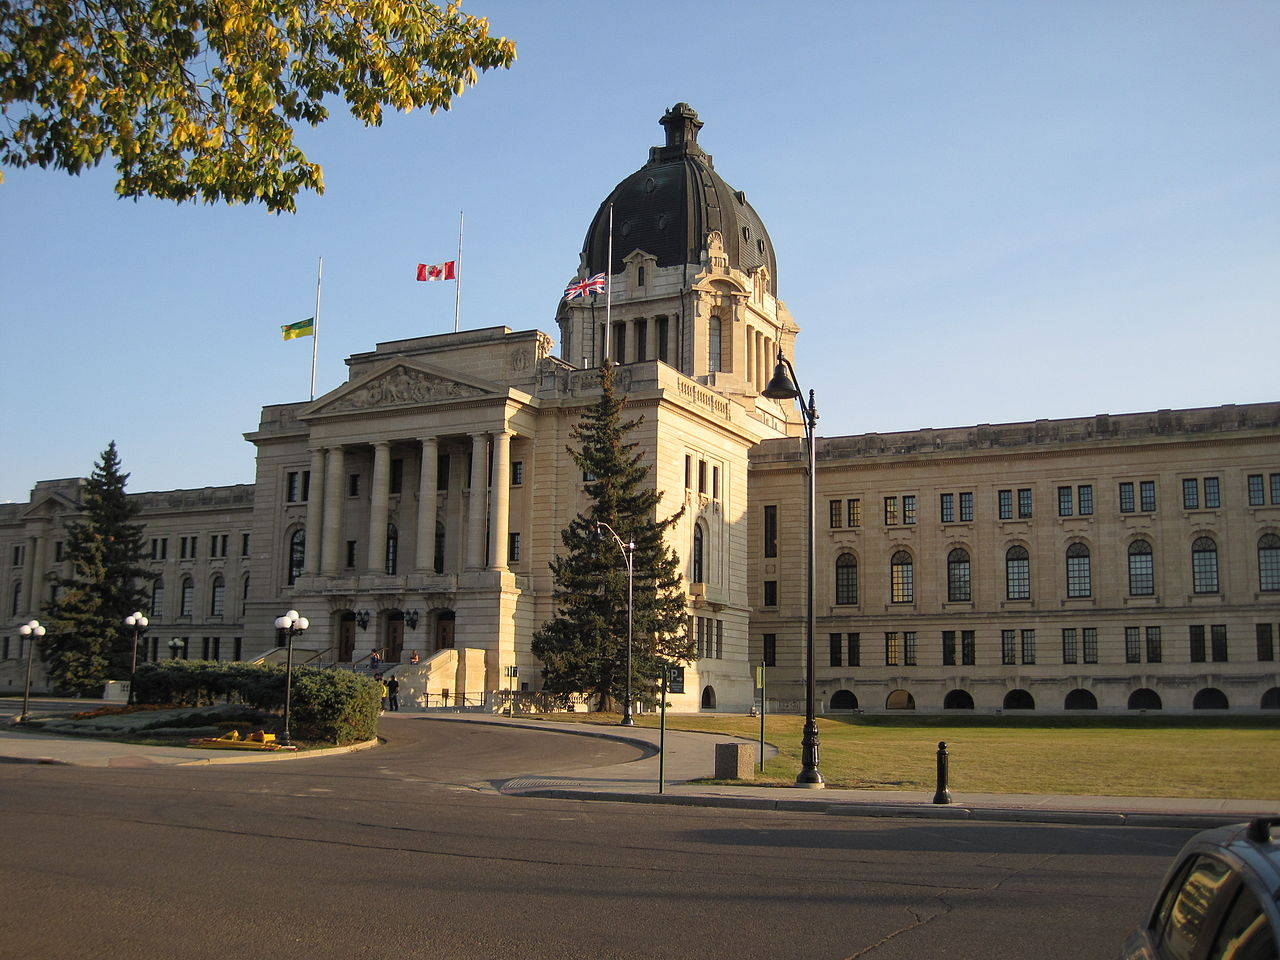 Saskatchewan - The Saskatchewan Legislative Building